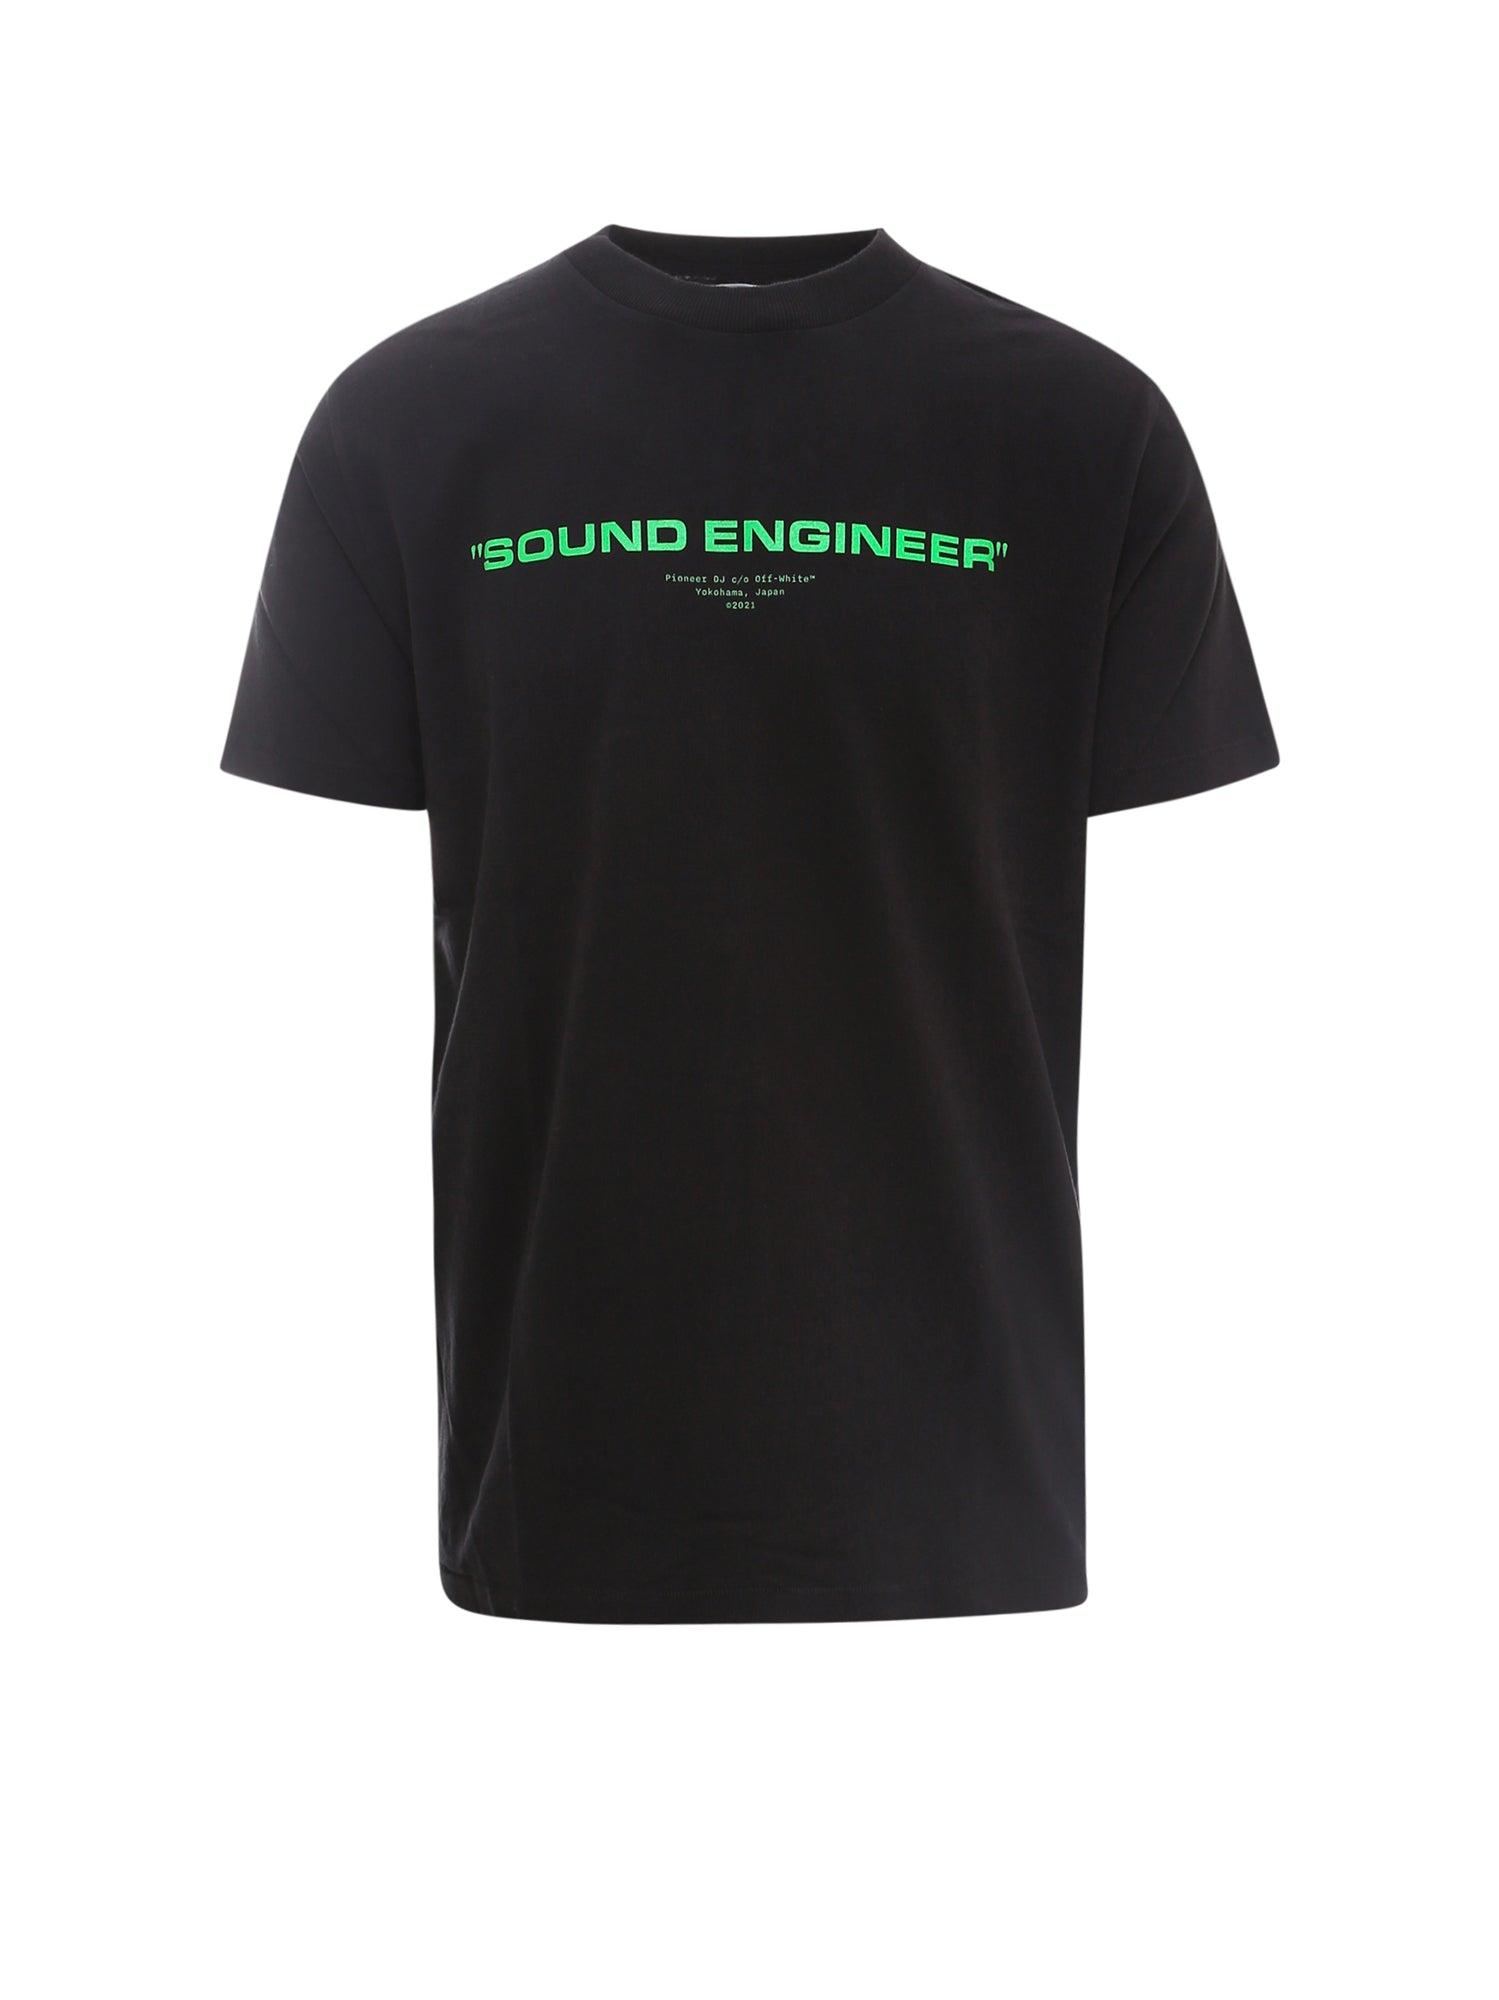 Off-White c/o Virgil Abloh 2021 x Pioneer 'Sound Engineering